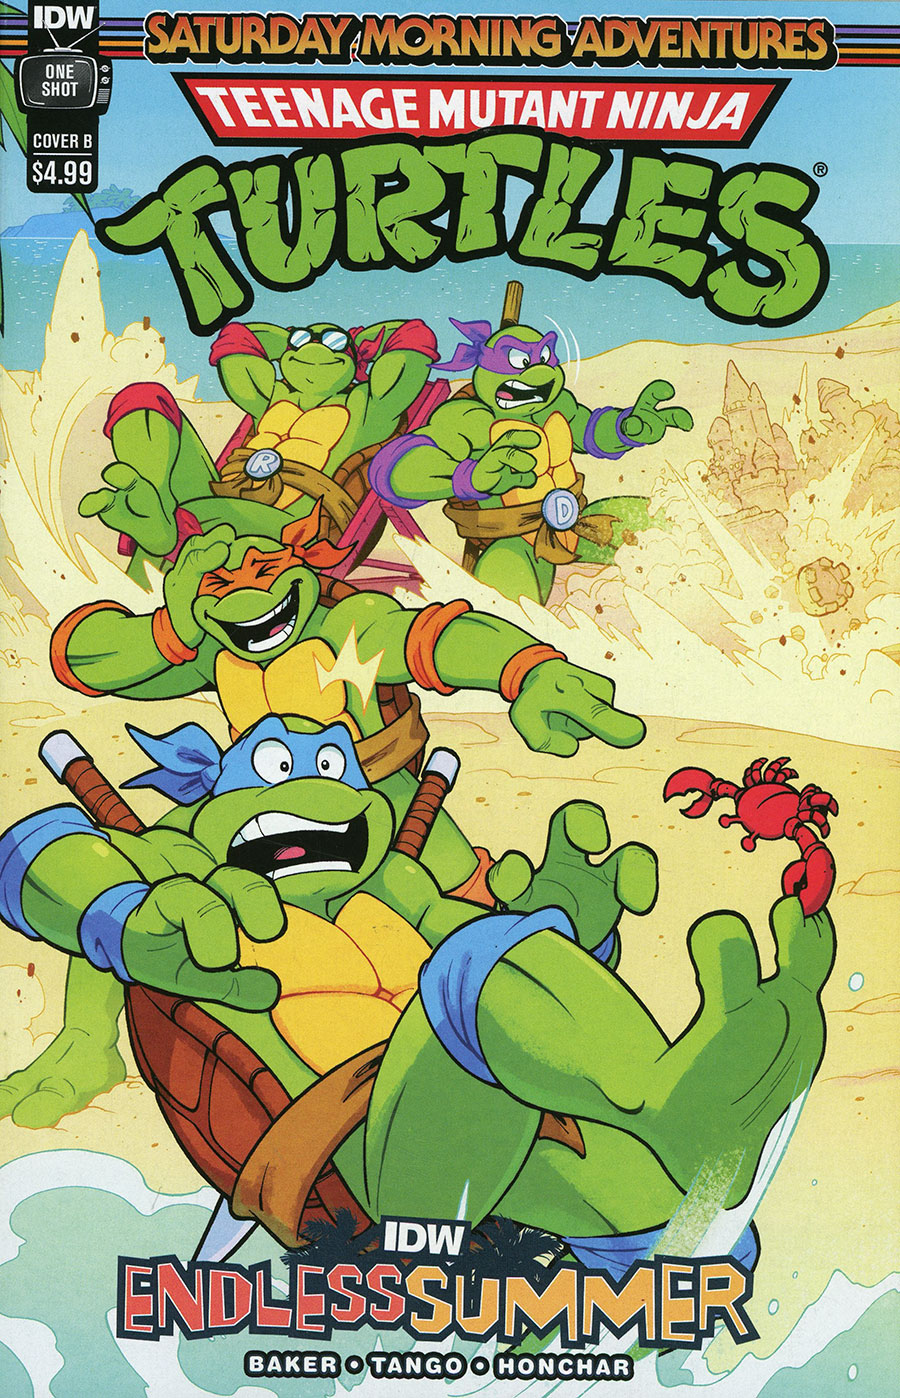 IDW Endless Summer Teenage Mutant Ninja Turtles Saturday Morning Adventures #1 (One Shot) Cover B Variant Jack Lawrence Cover